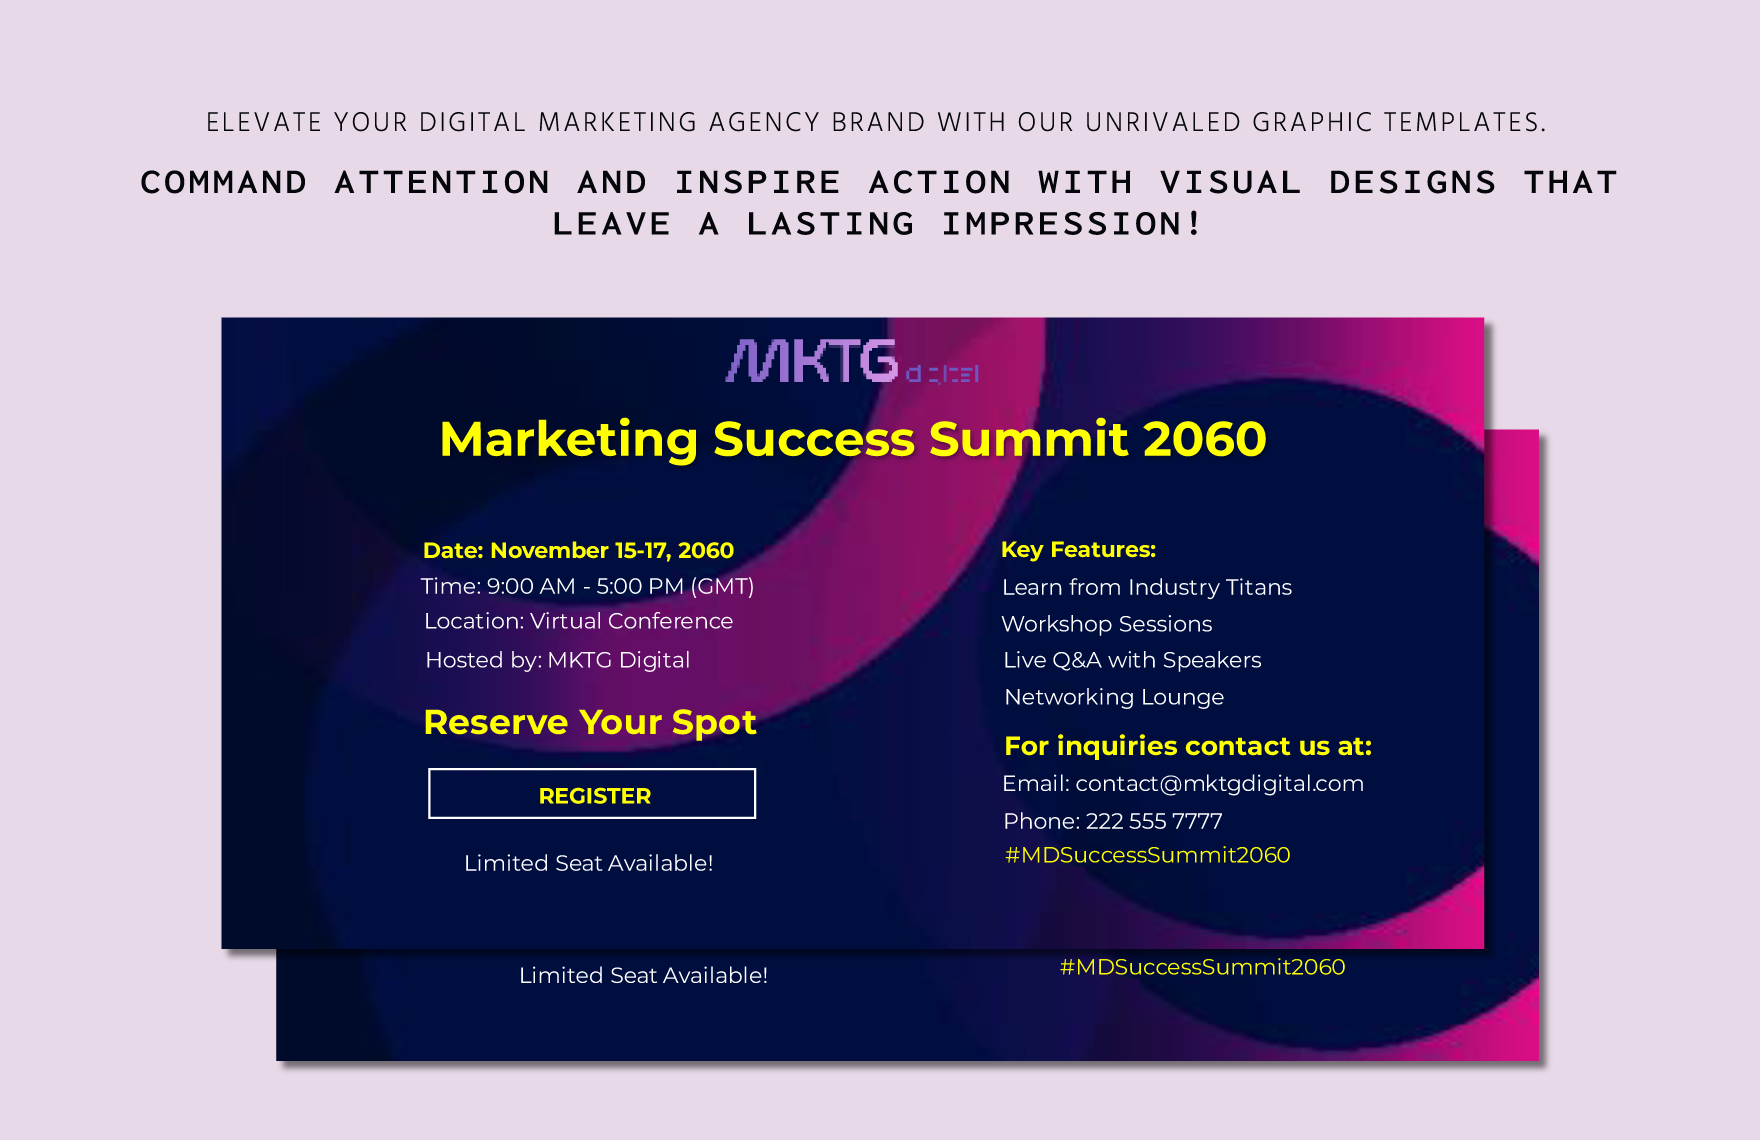 Digital Marketing Agency Rectangular Event Banner Template